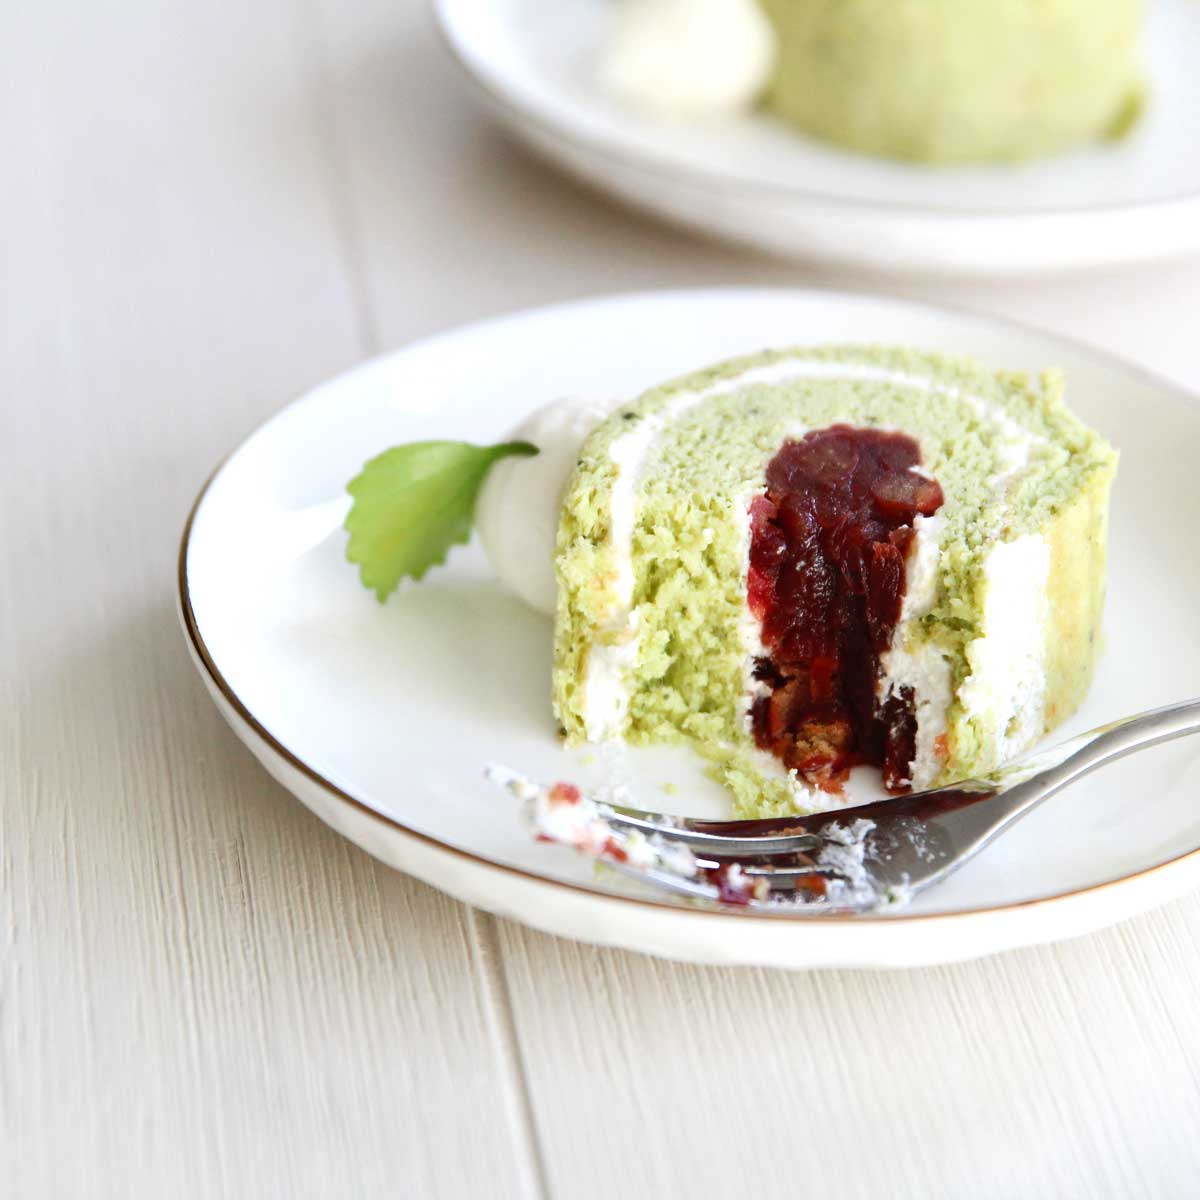 Gluten Free Japanese Matcha Roll Cake with a Sweet Adzuki Filling - Matcha Scones